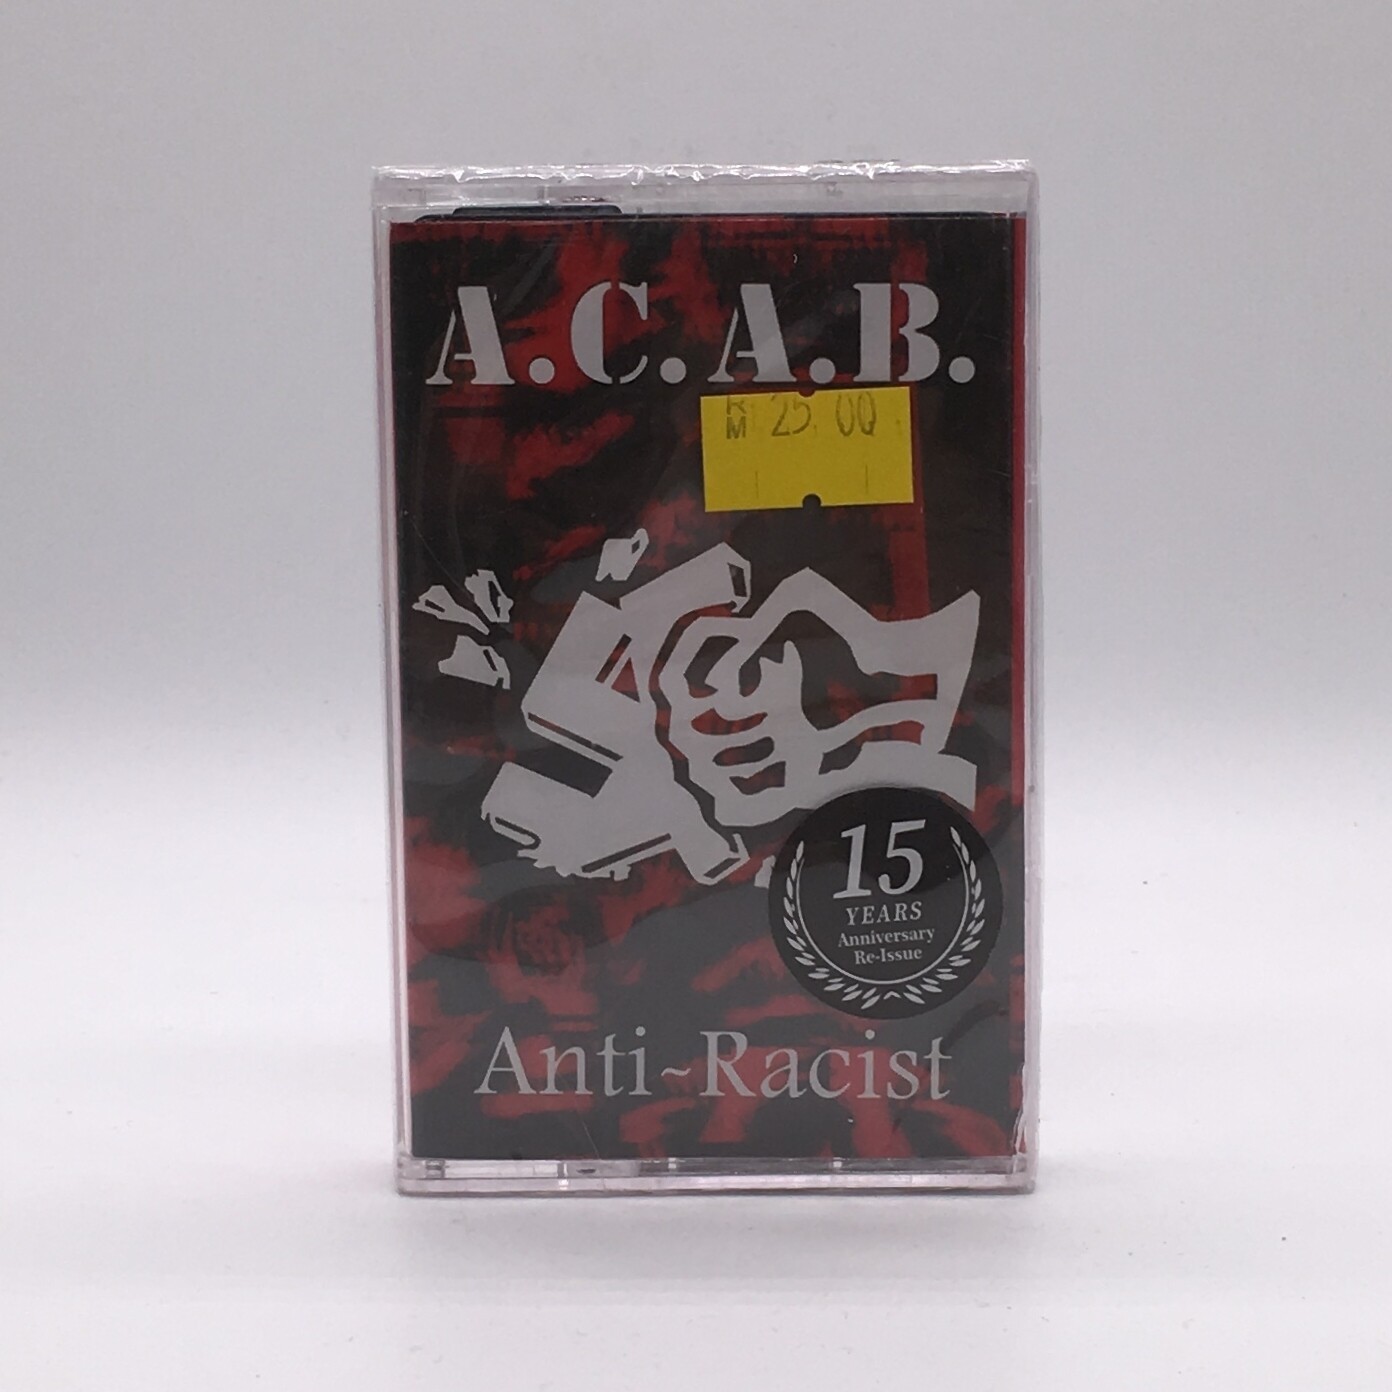 ACAB -ANTI RACIST- CASSETTE